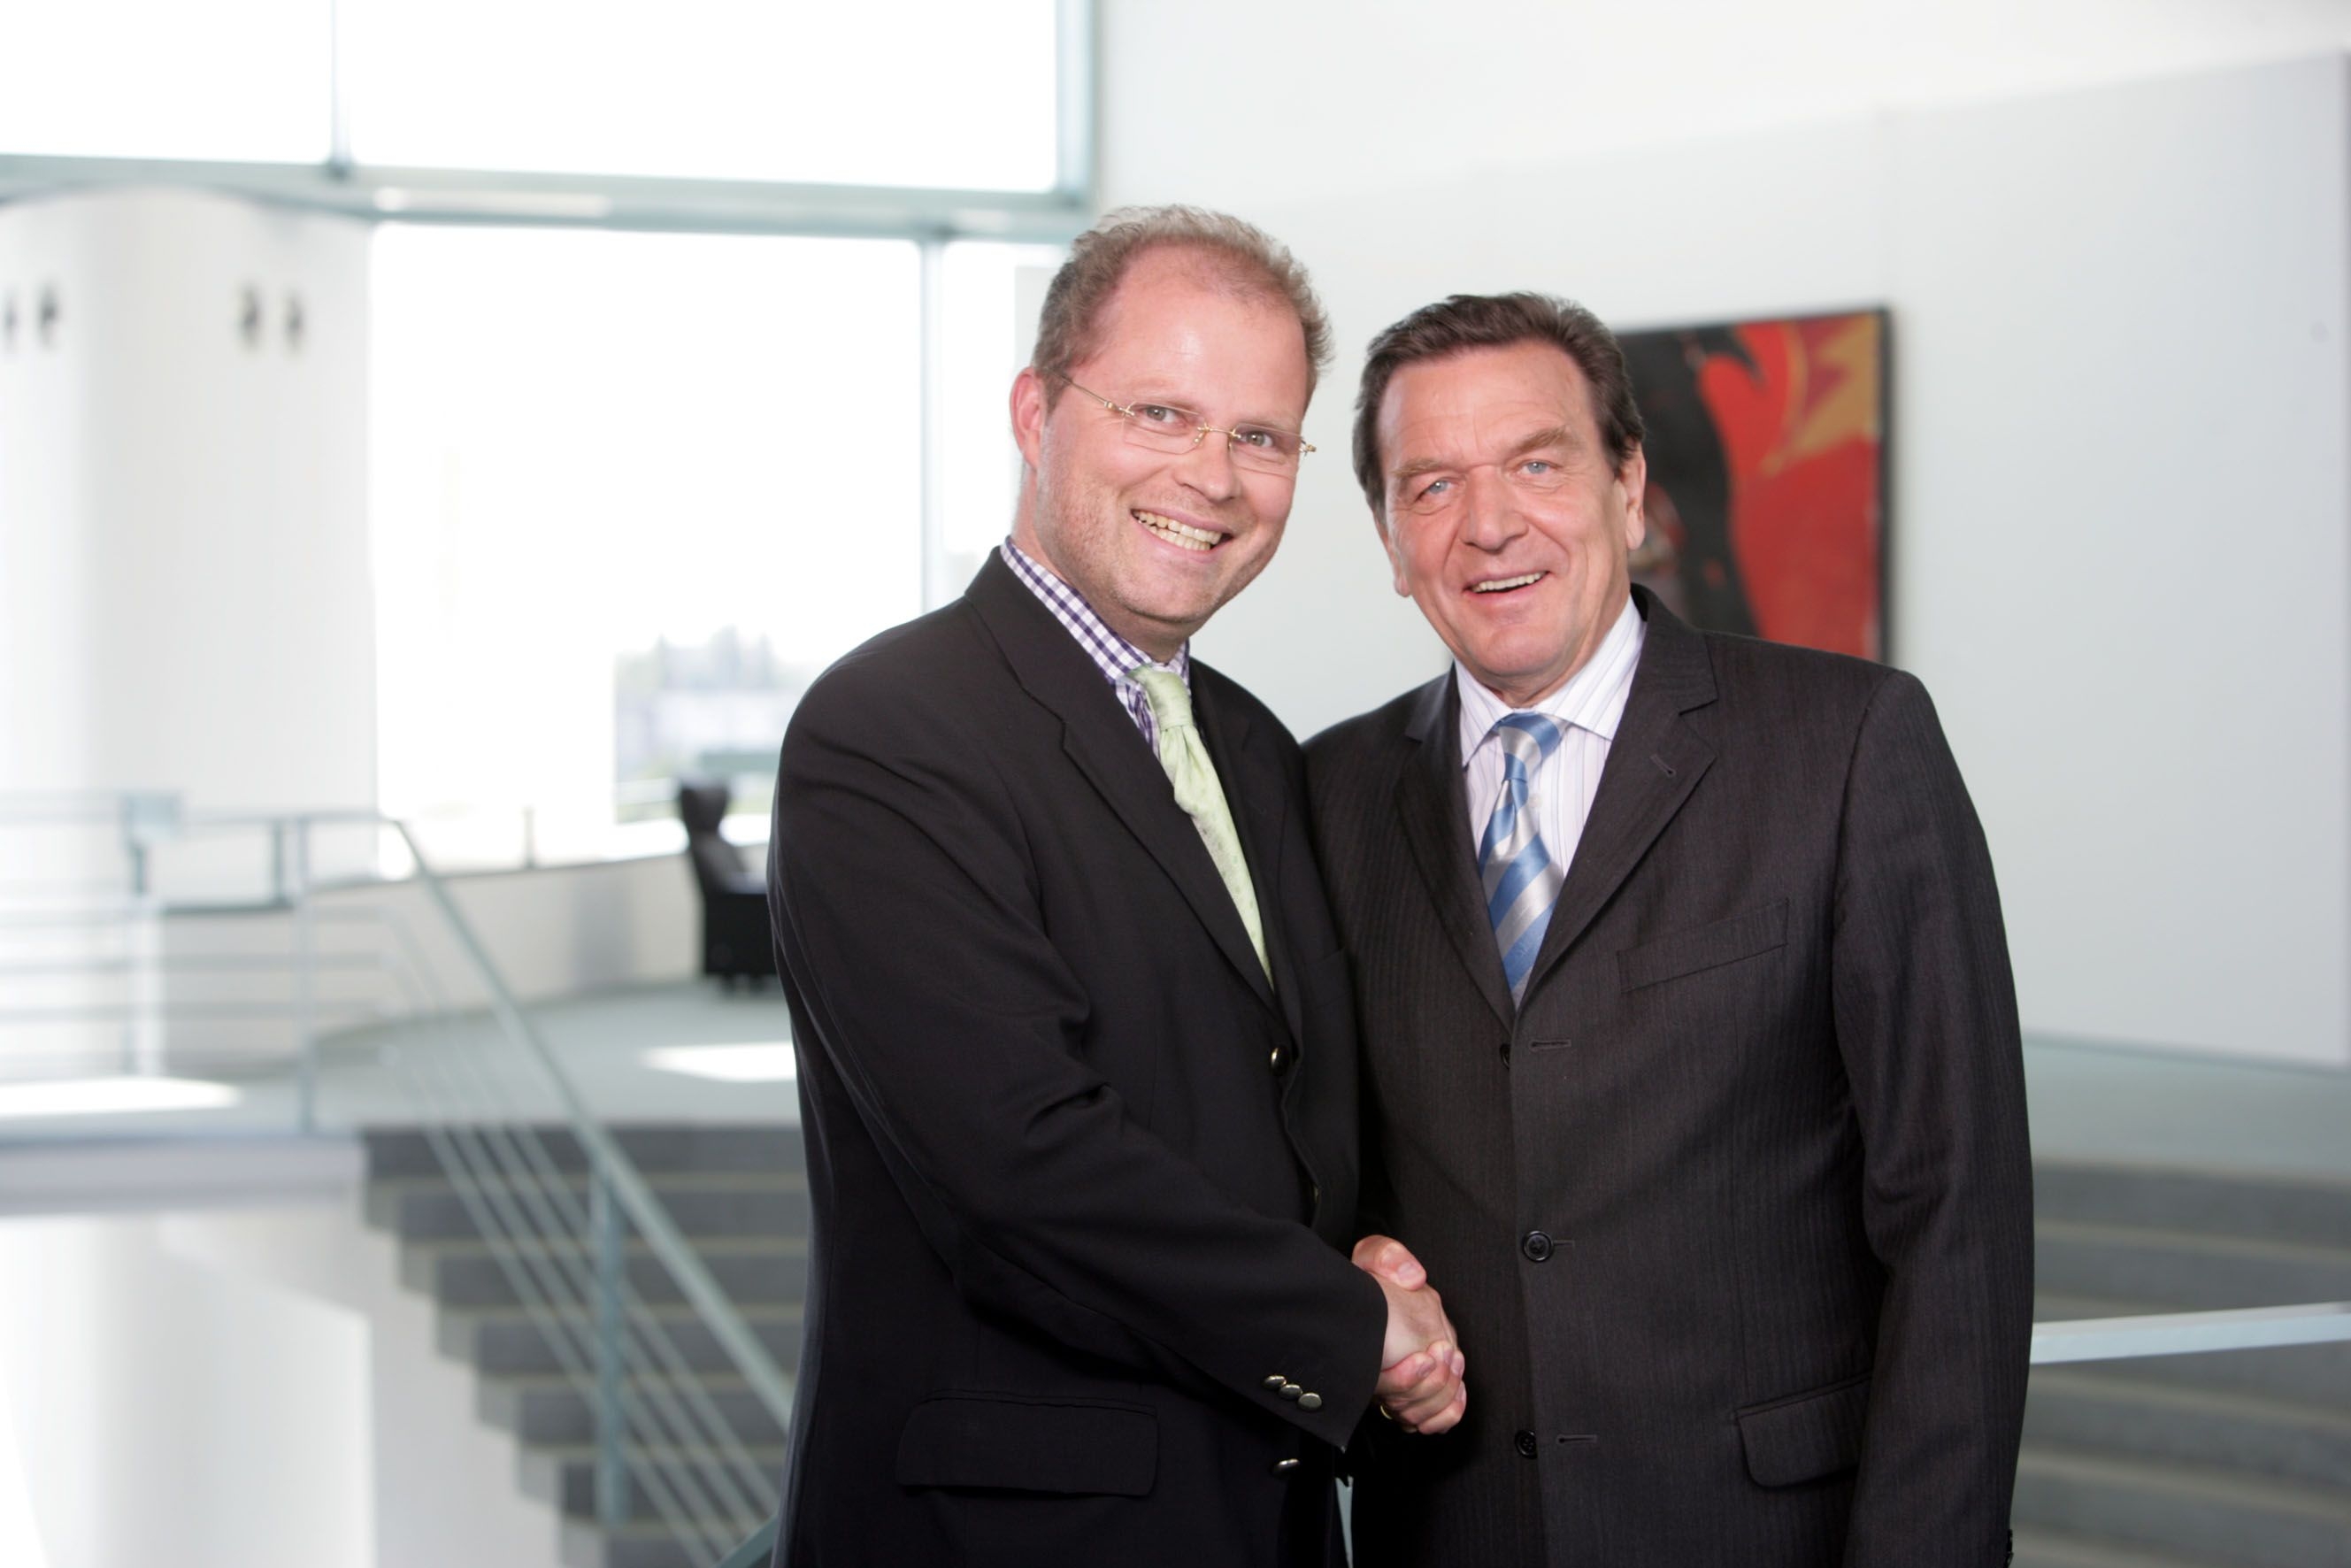  Christian Lange avec Gerhard Schröder en 2005